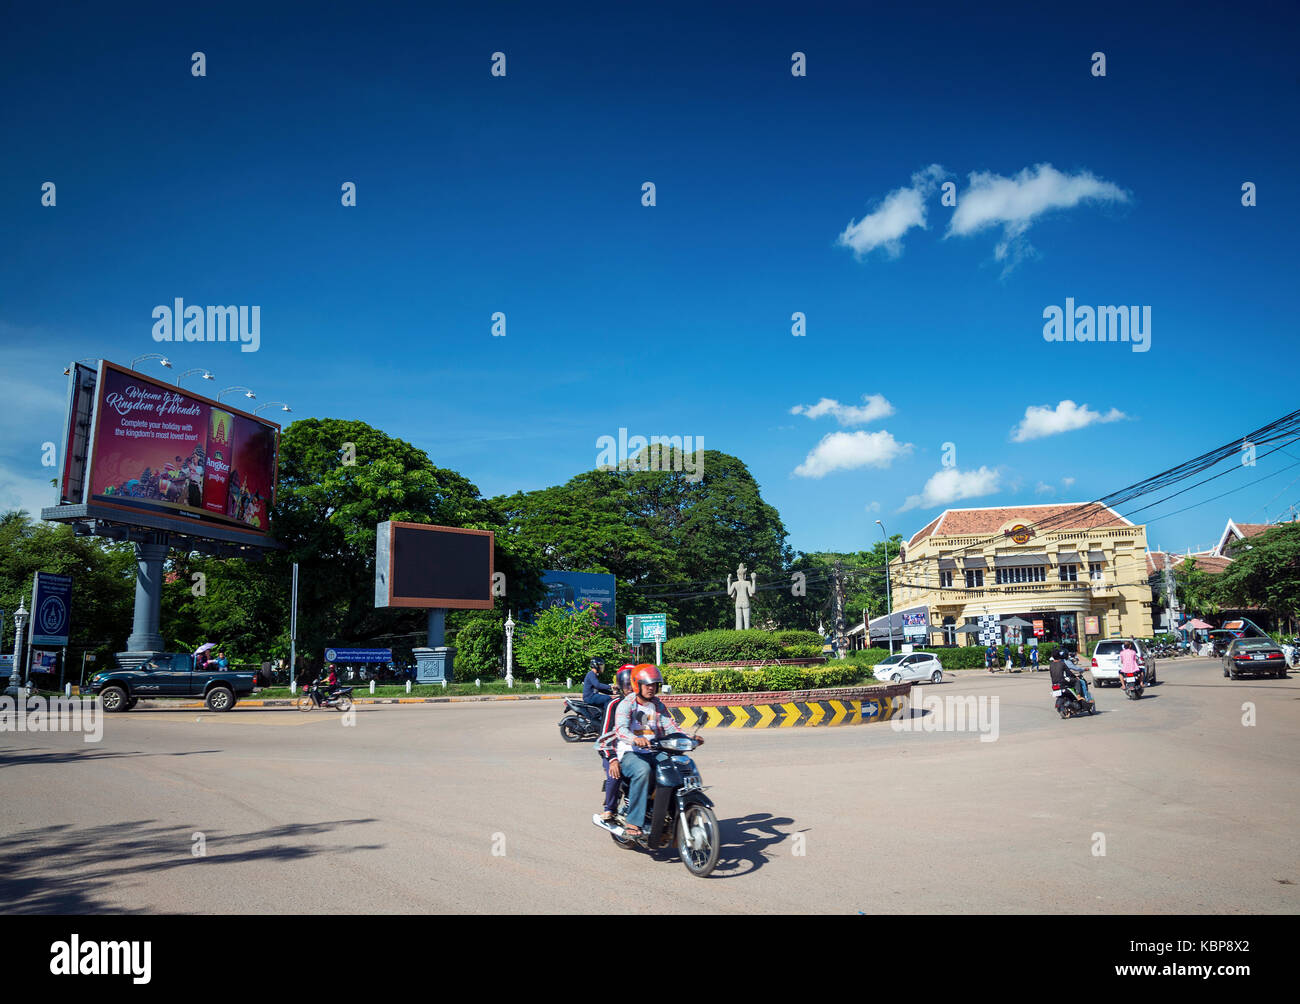 Wat damnak rotonda nel centro di siem reap città nei pressi di Angkor Wat Cambogia Foto Stock